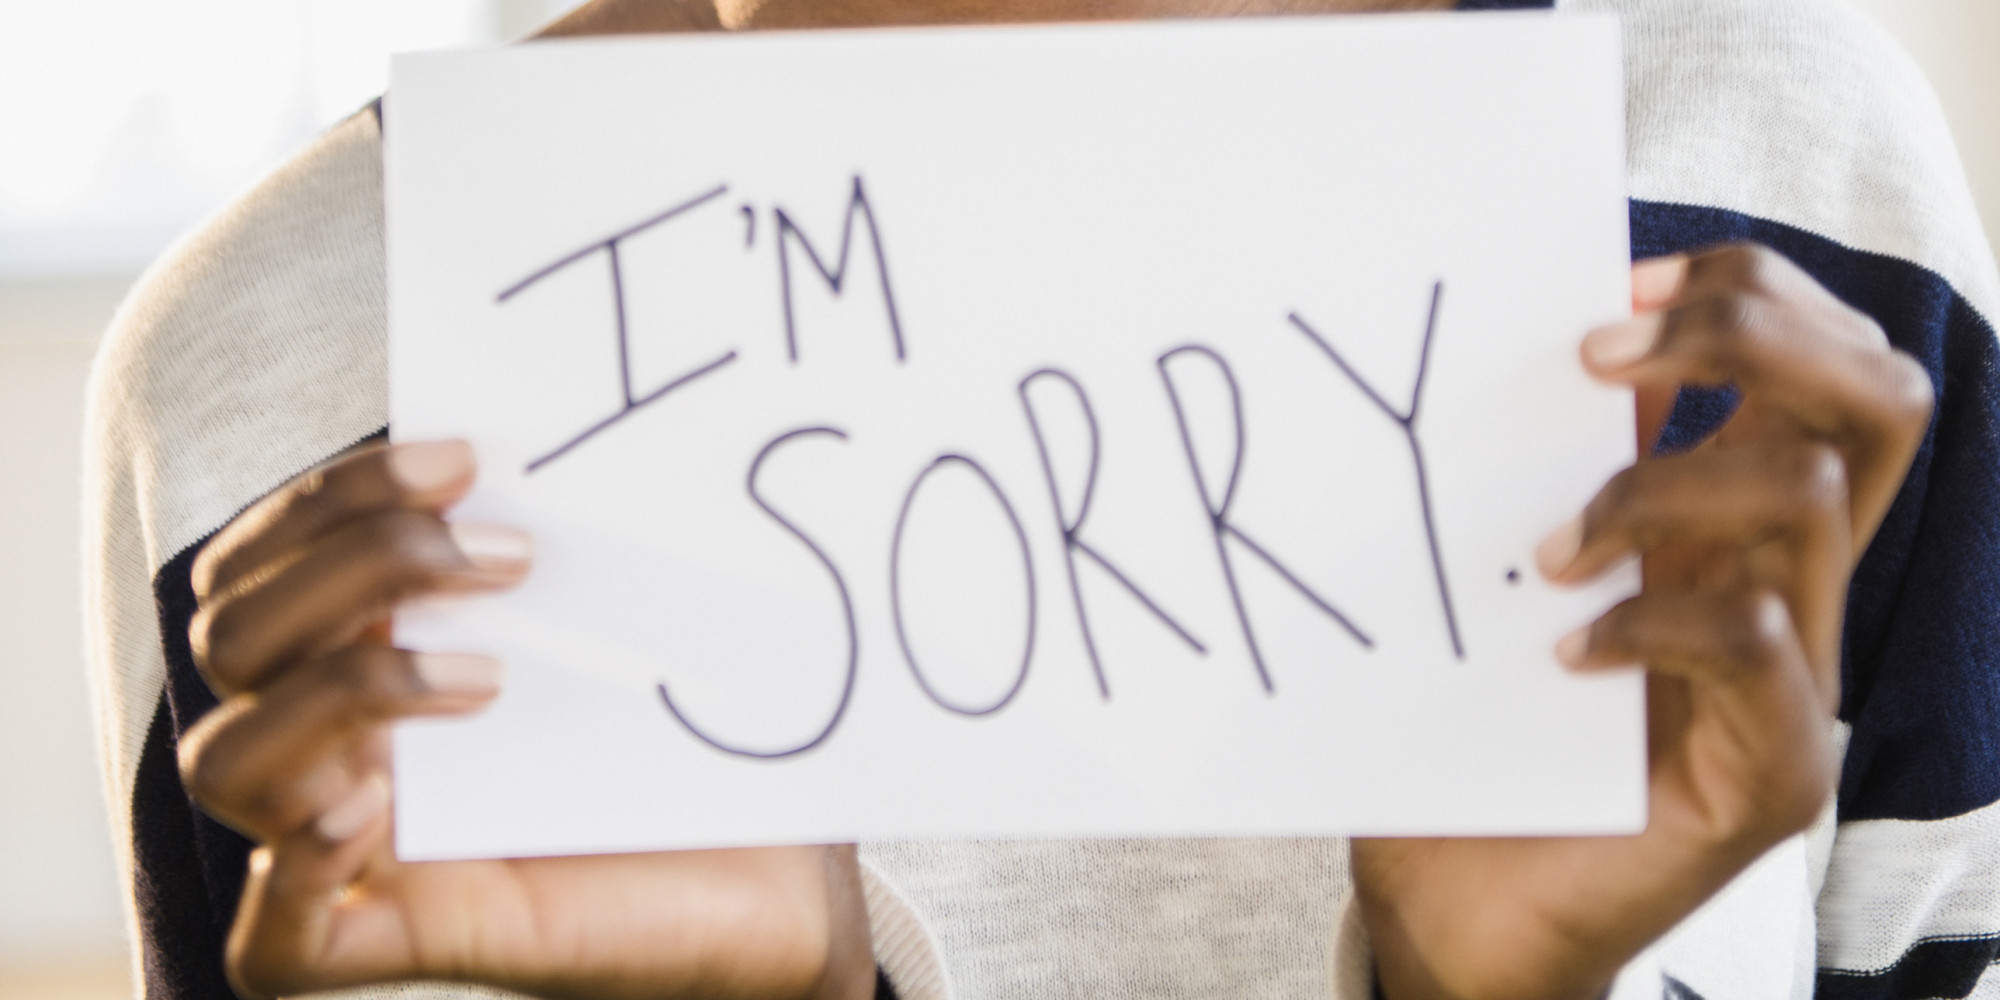 Make an apology. No apology. Say sorry. Man saying sorry. Wrong message